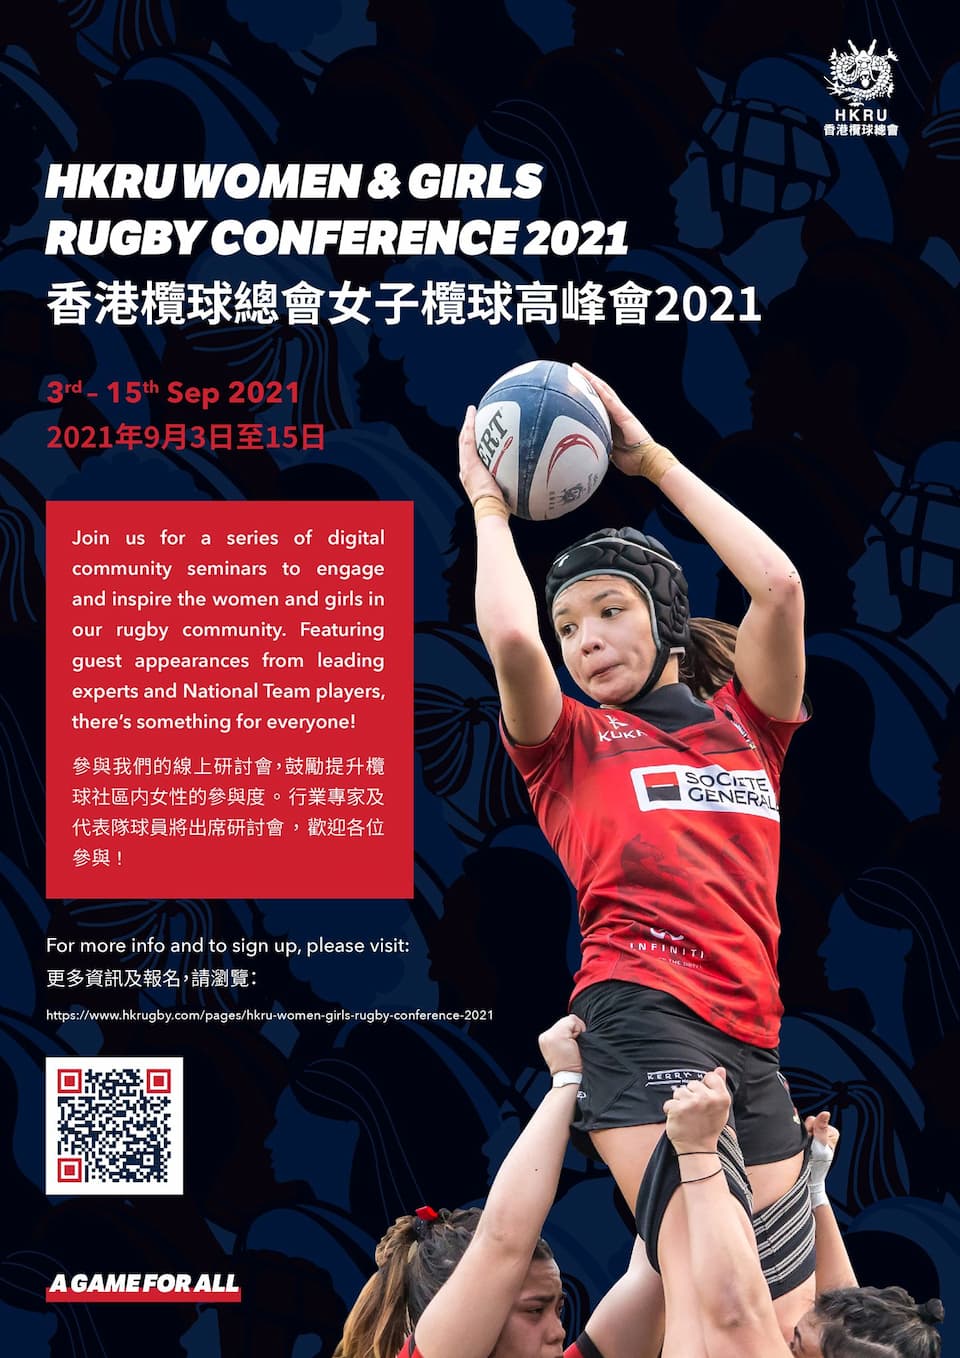 HKRU Women & Girls Conference 2021